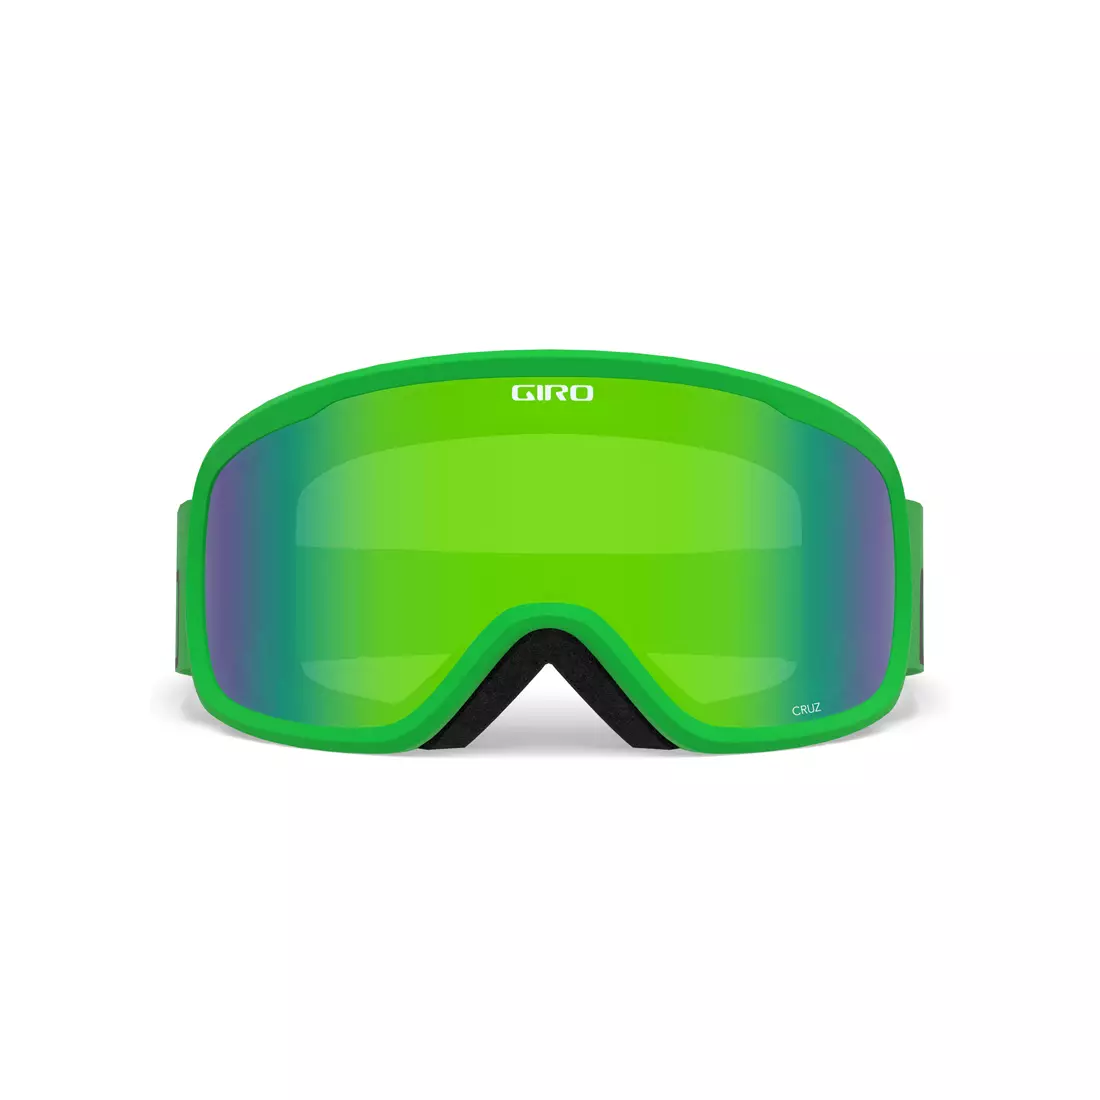 Ski / snowboard goggles GIRO CRUZ BRIGHT GREEN WORDMARK - GR-7083043